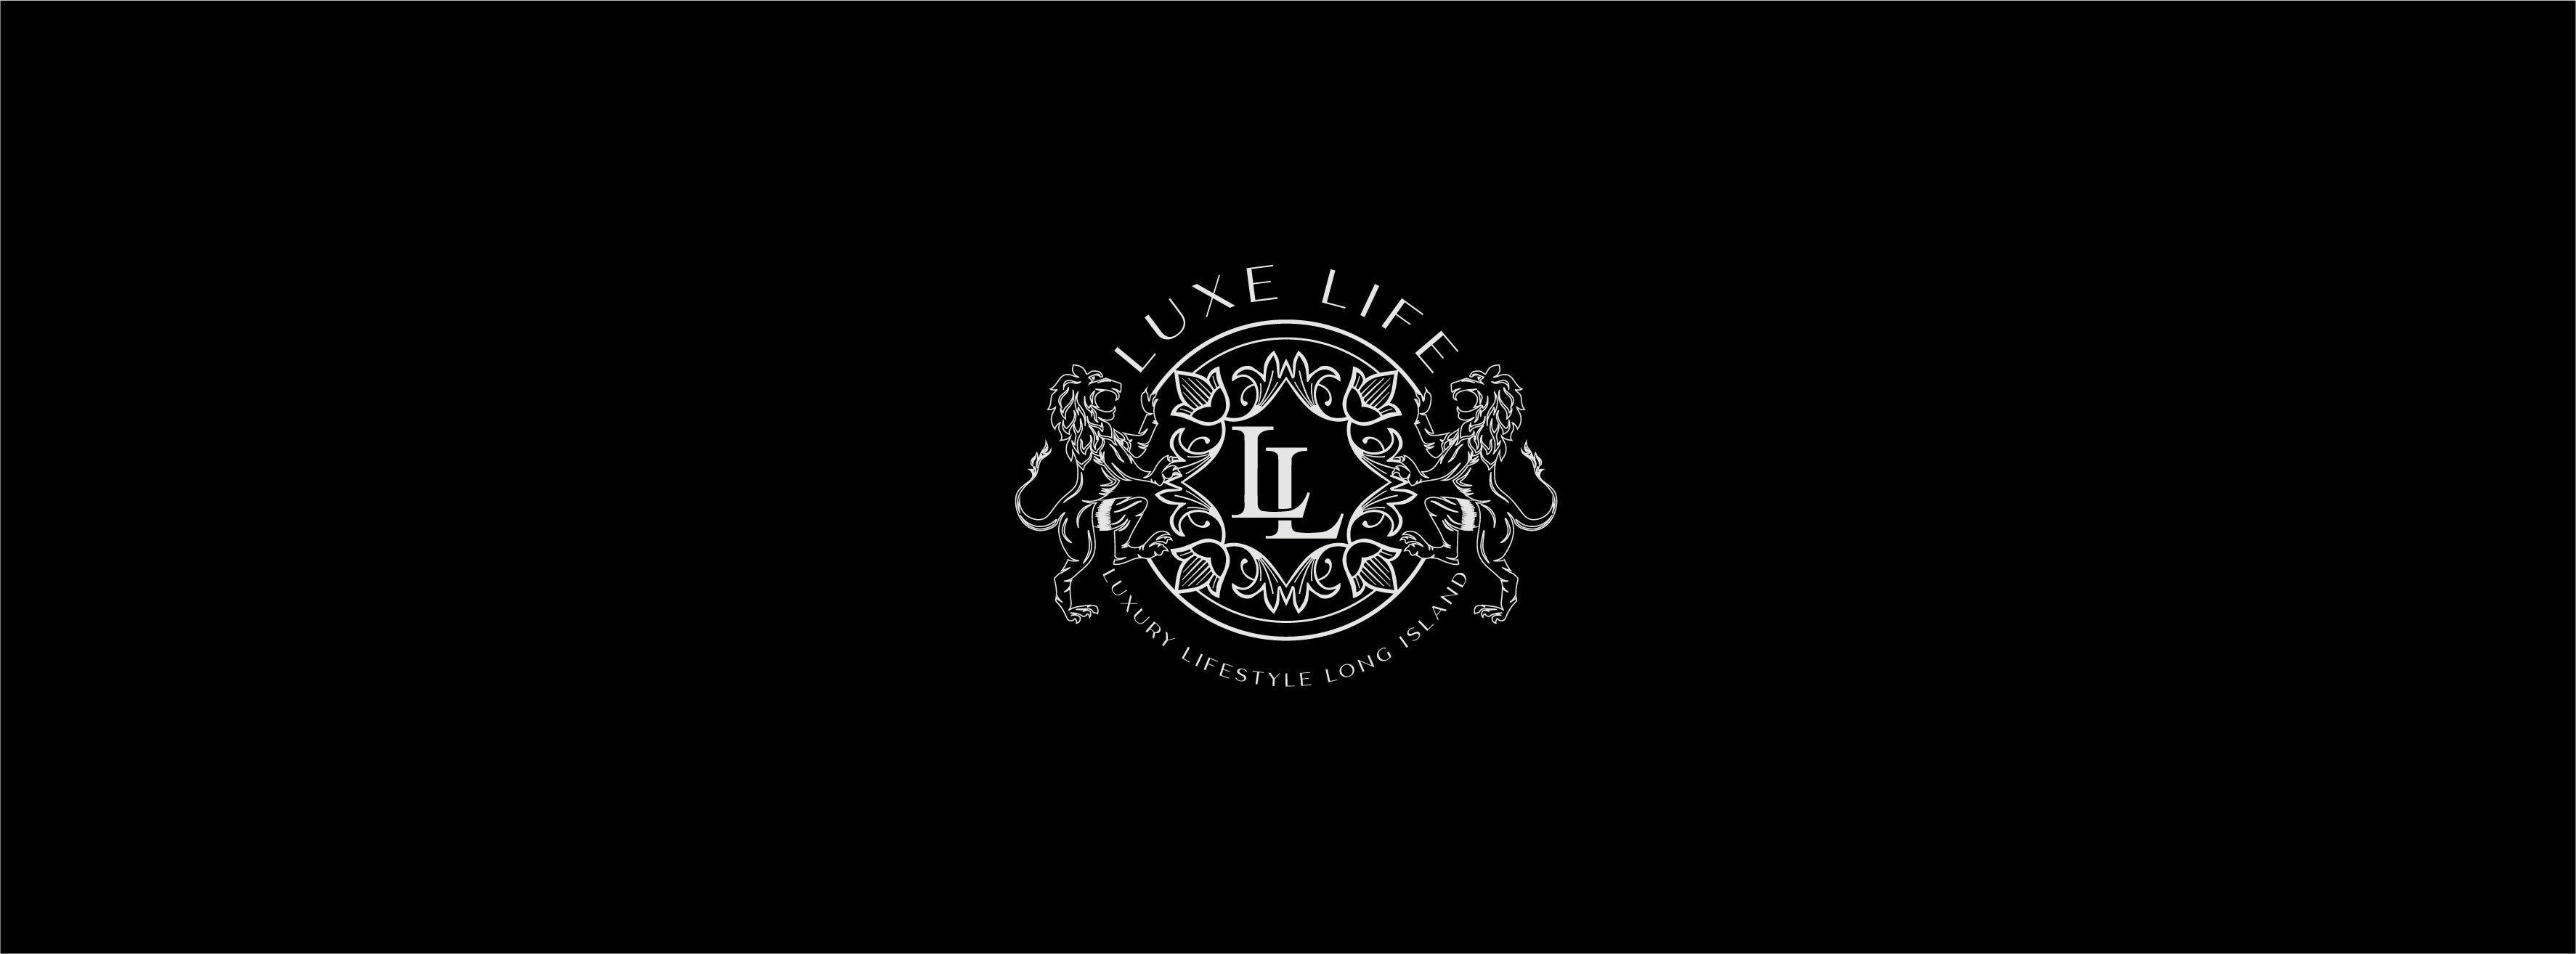 Luxe Life Long Island Logo